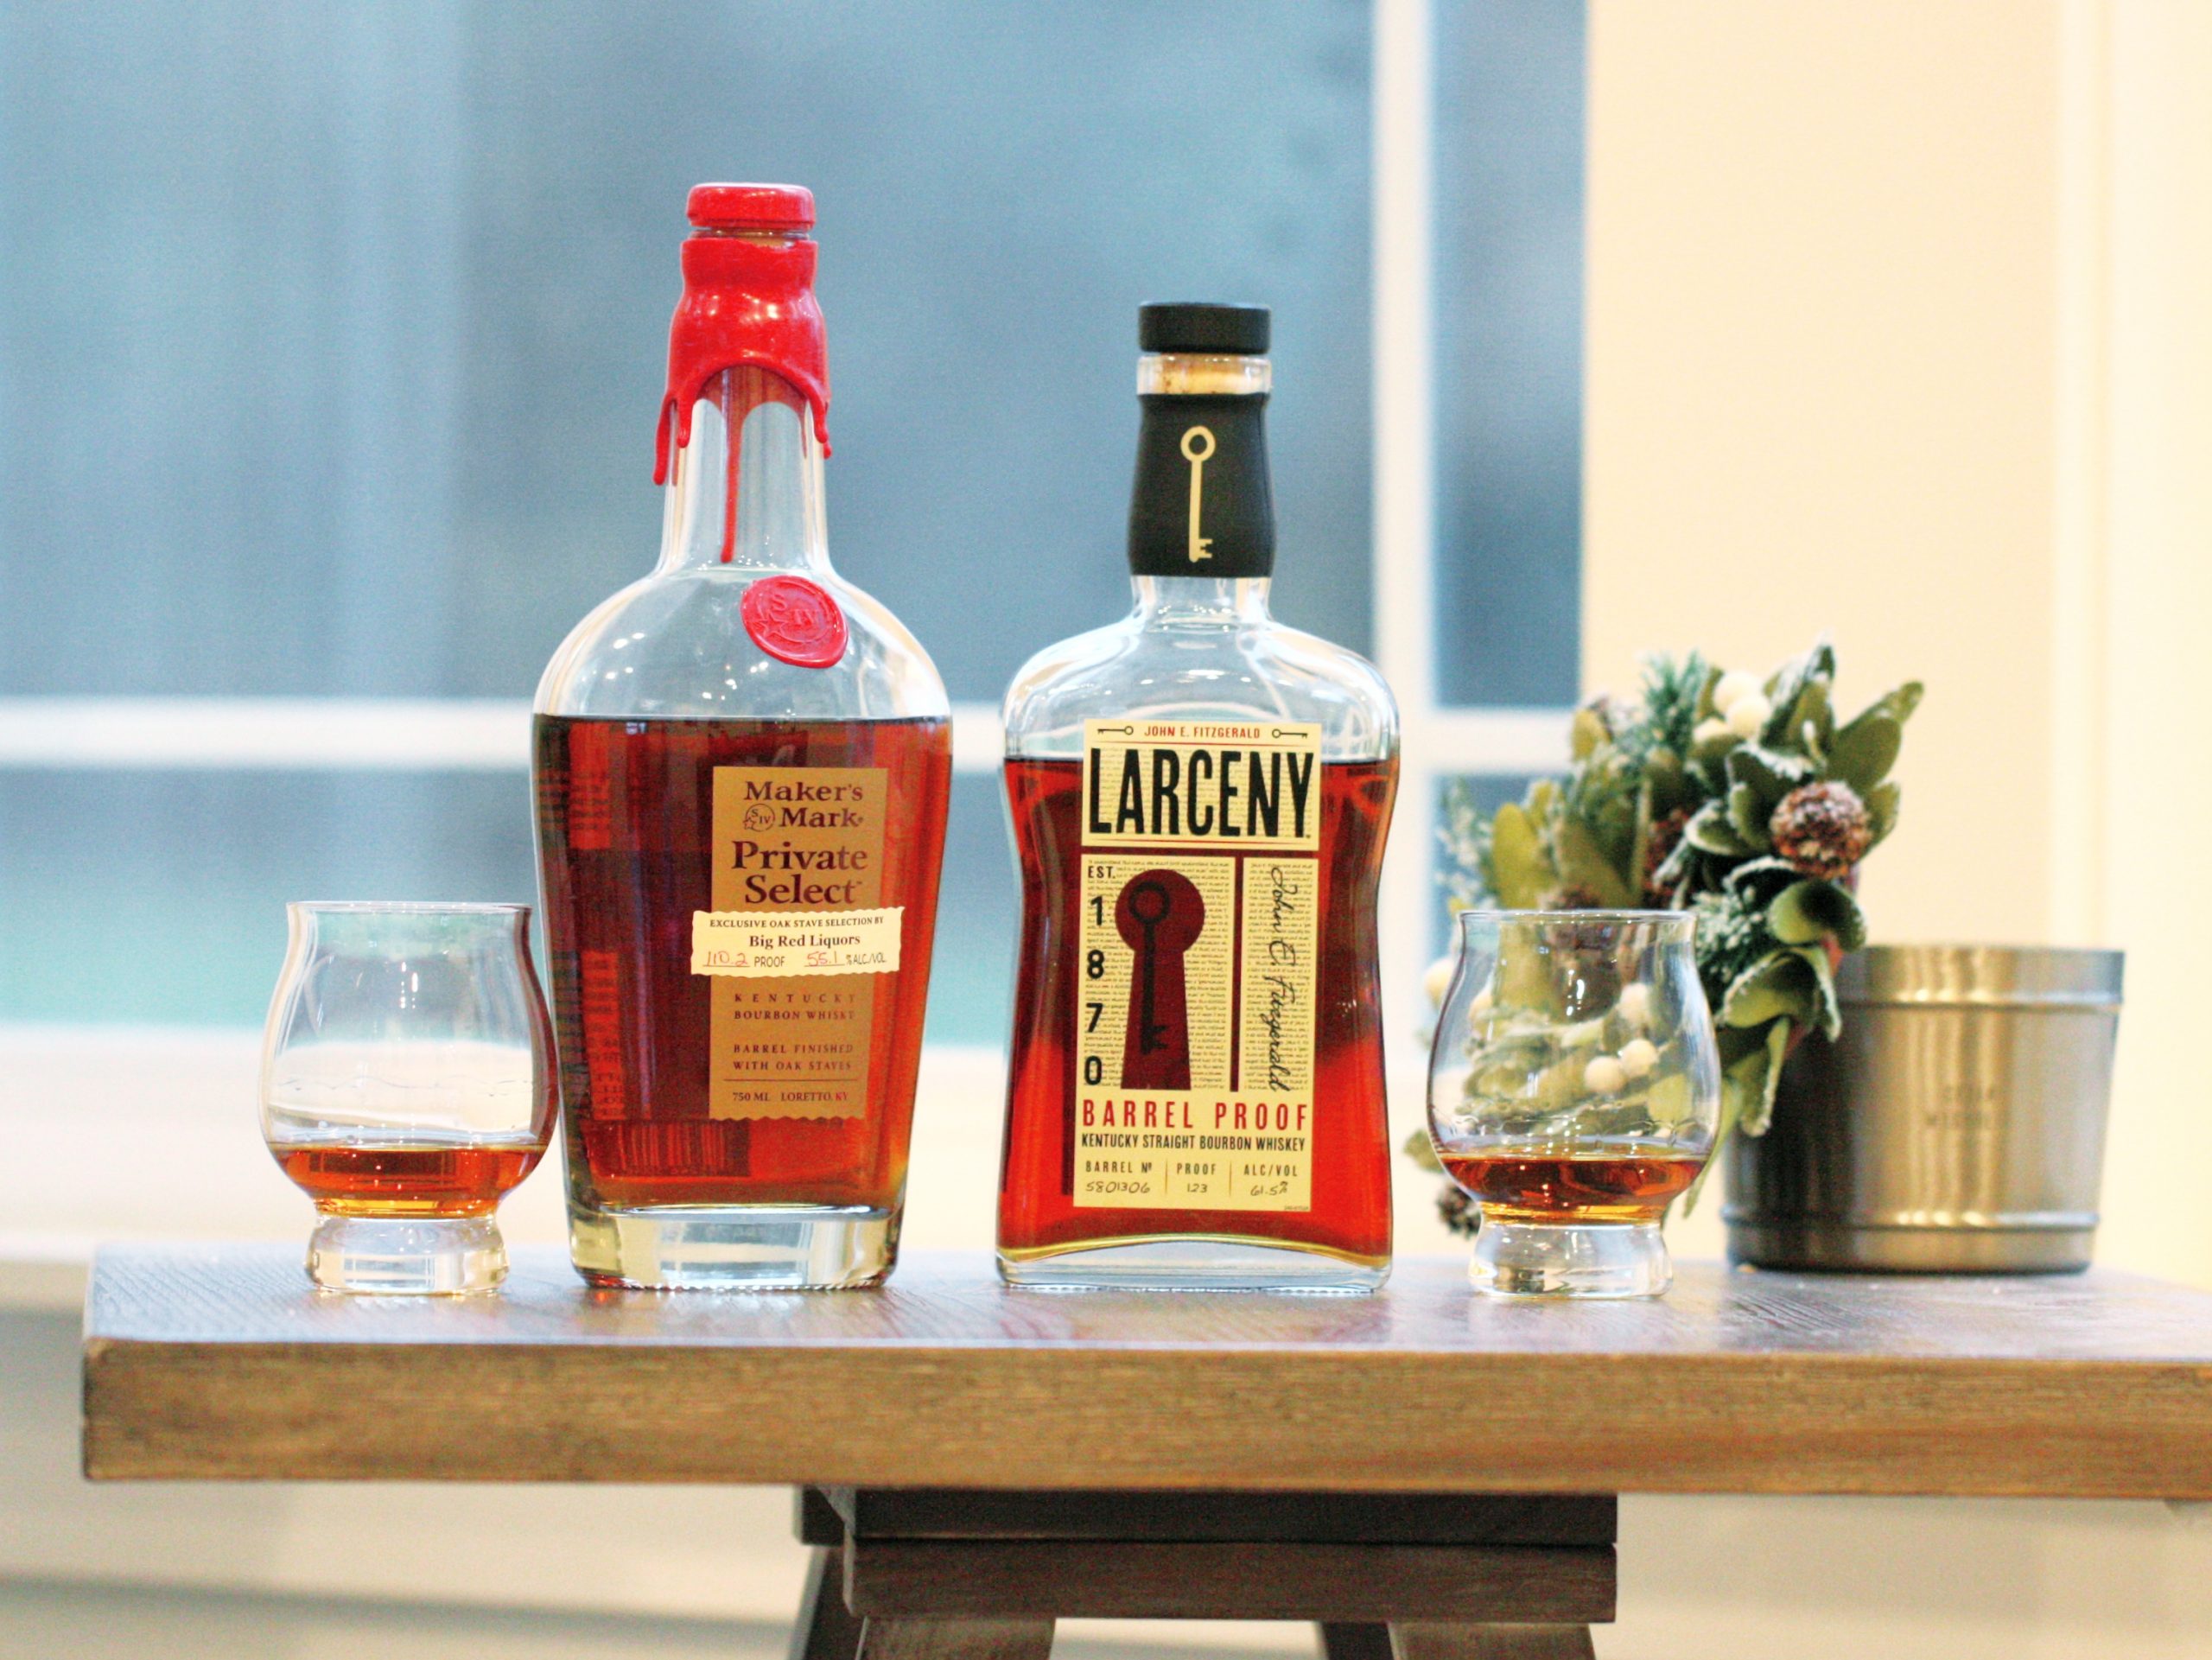 Larceny Bourbon vs. Maker’s Mark Private Select